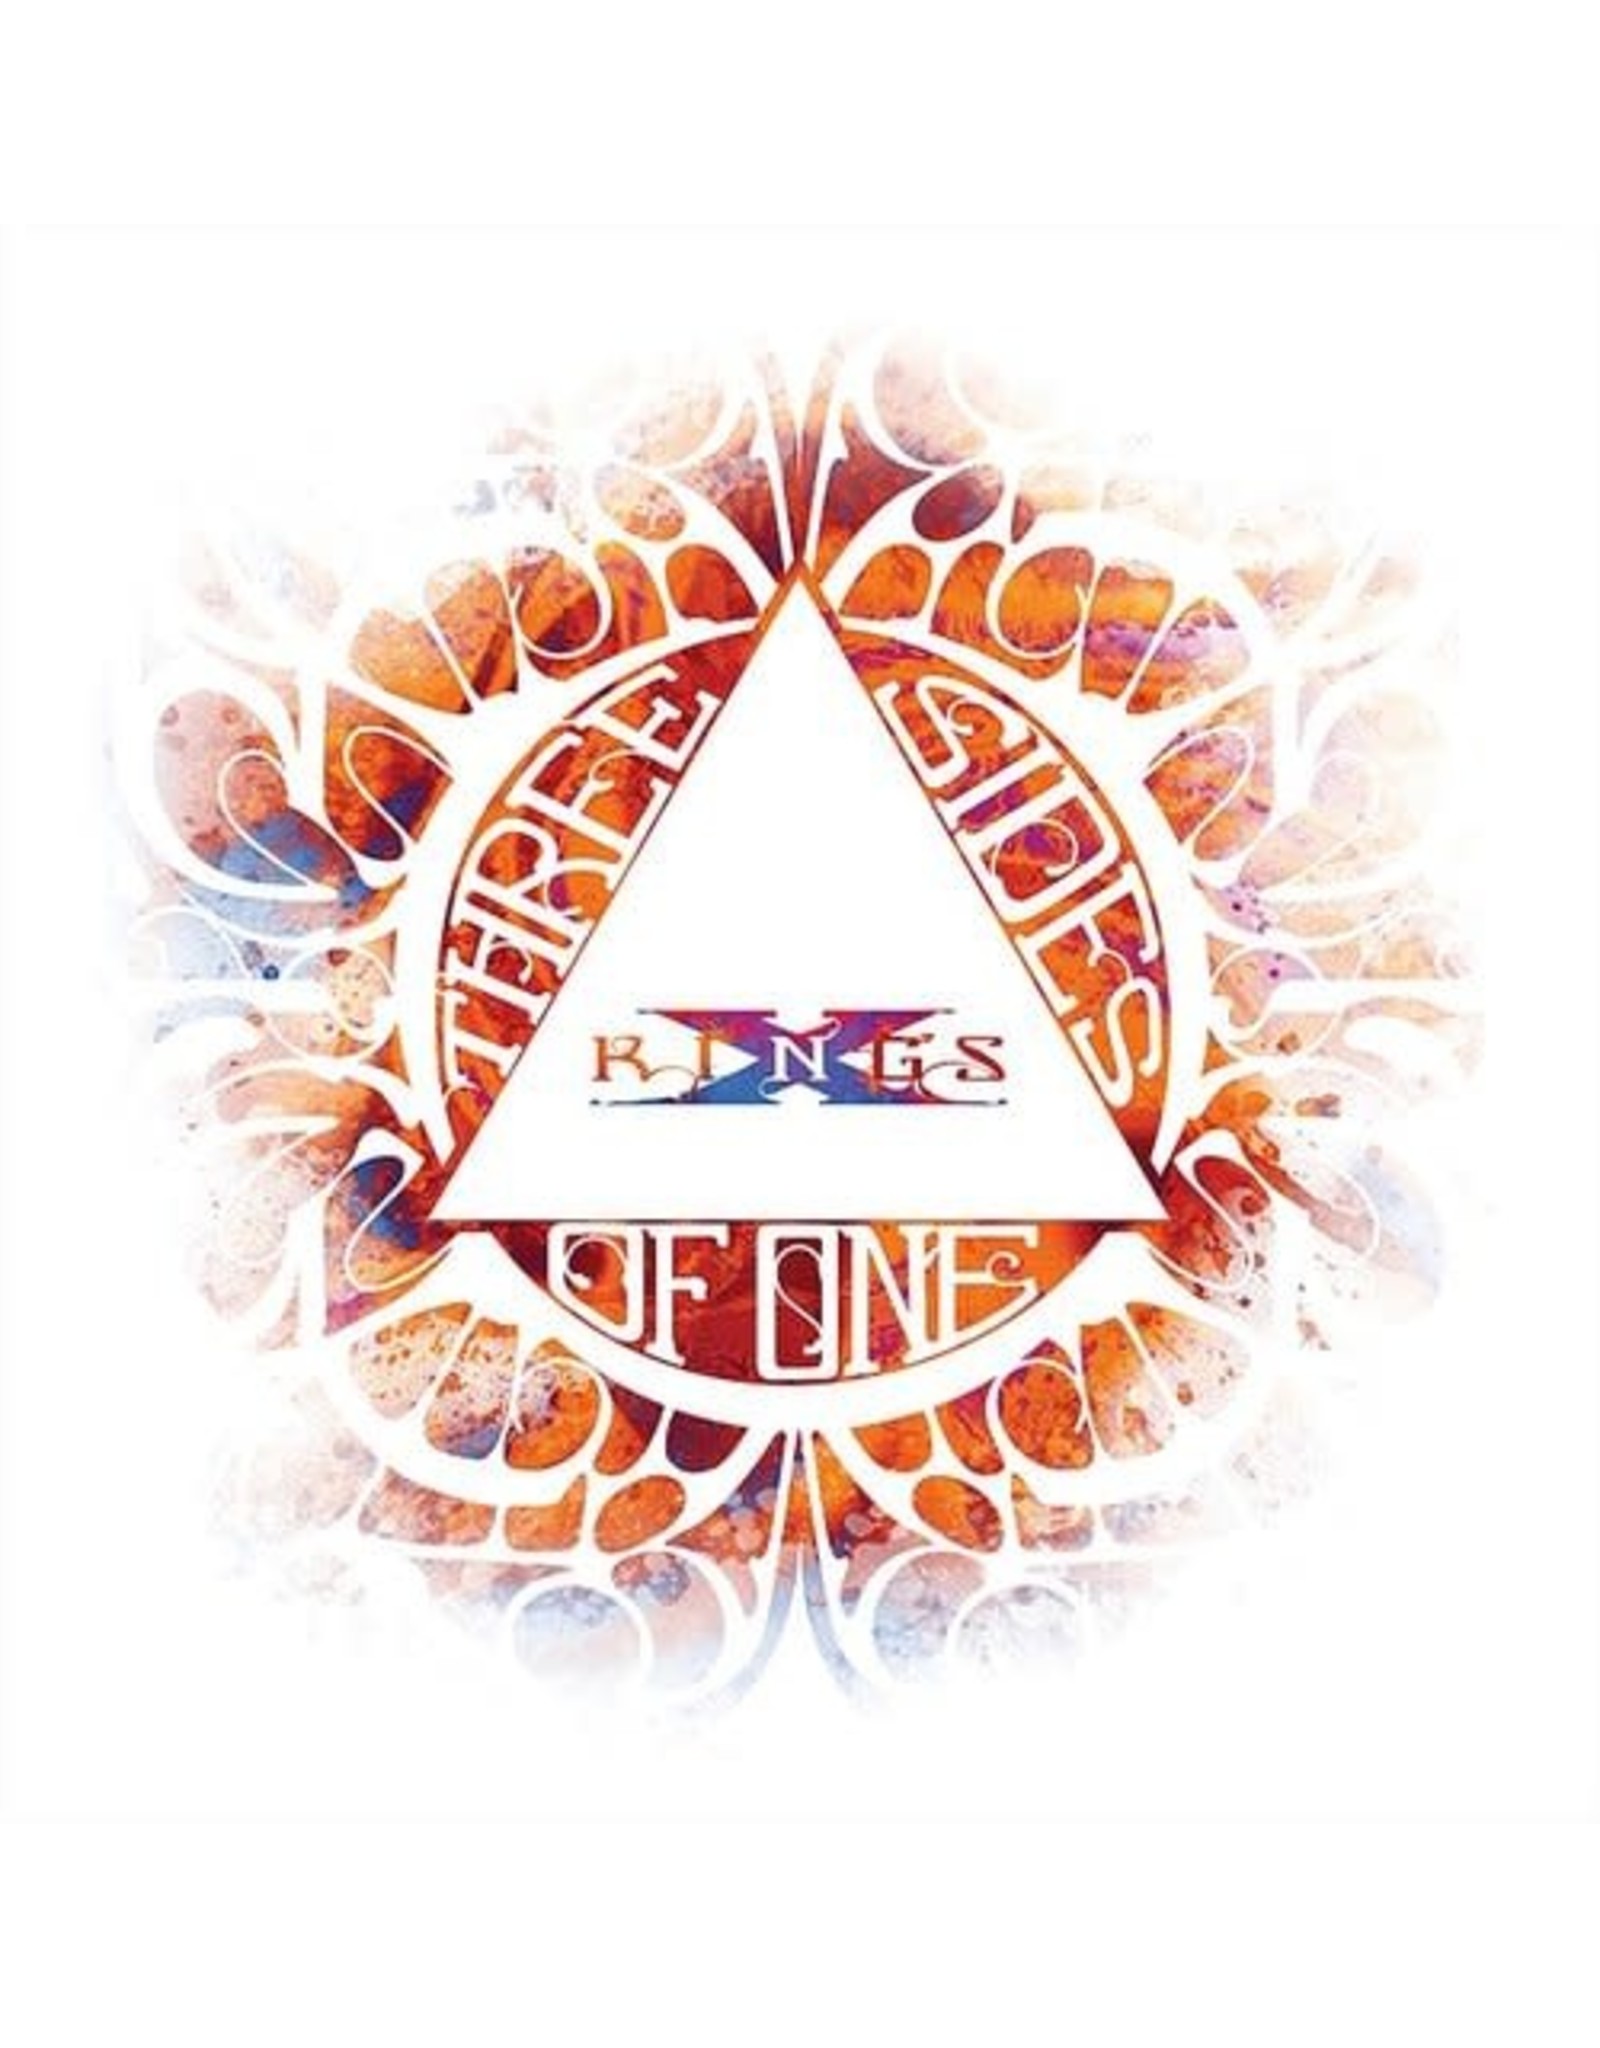 King's X - Three Sides Of One (2LP/180g w/CD)